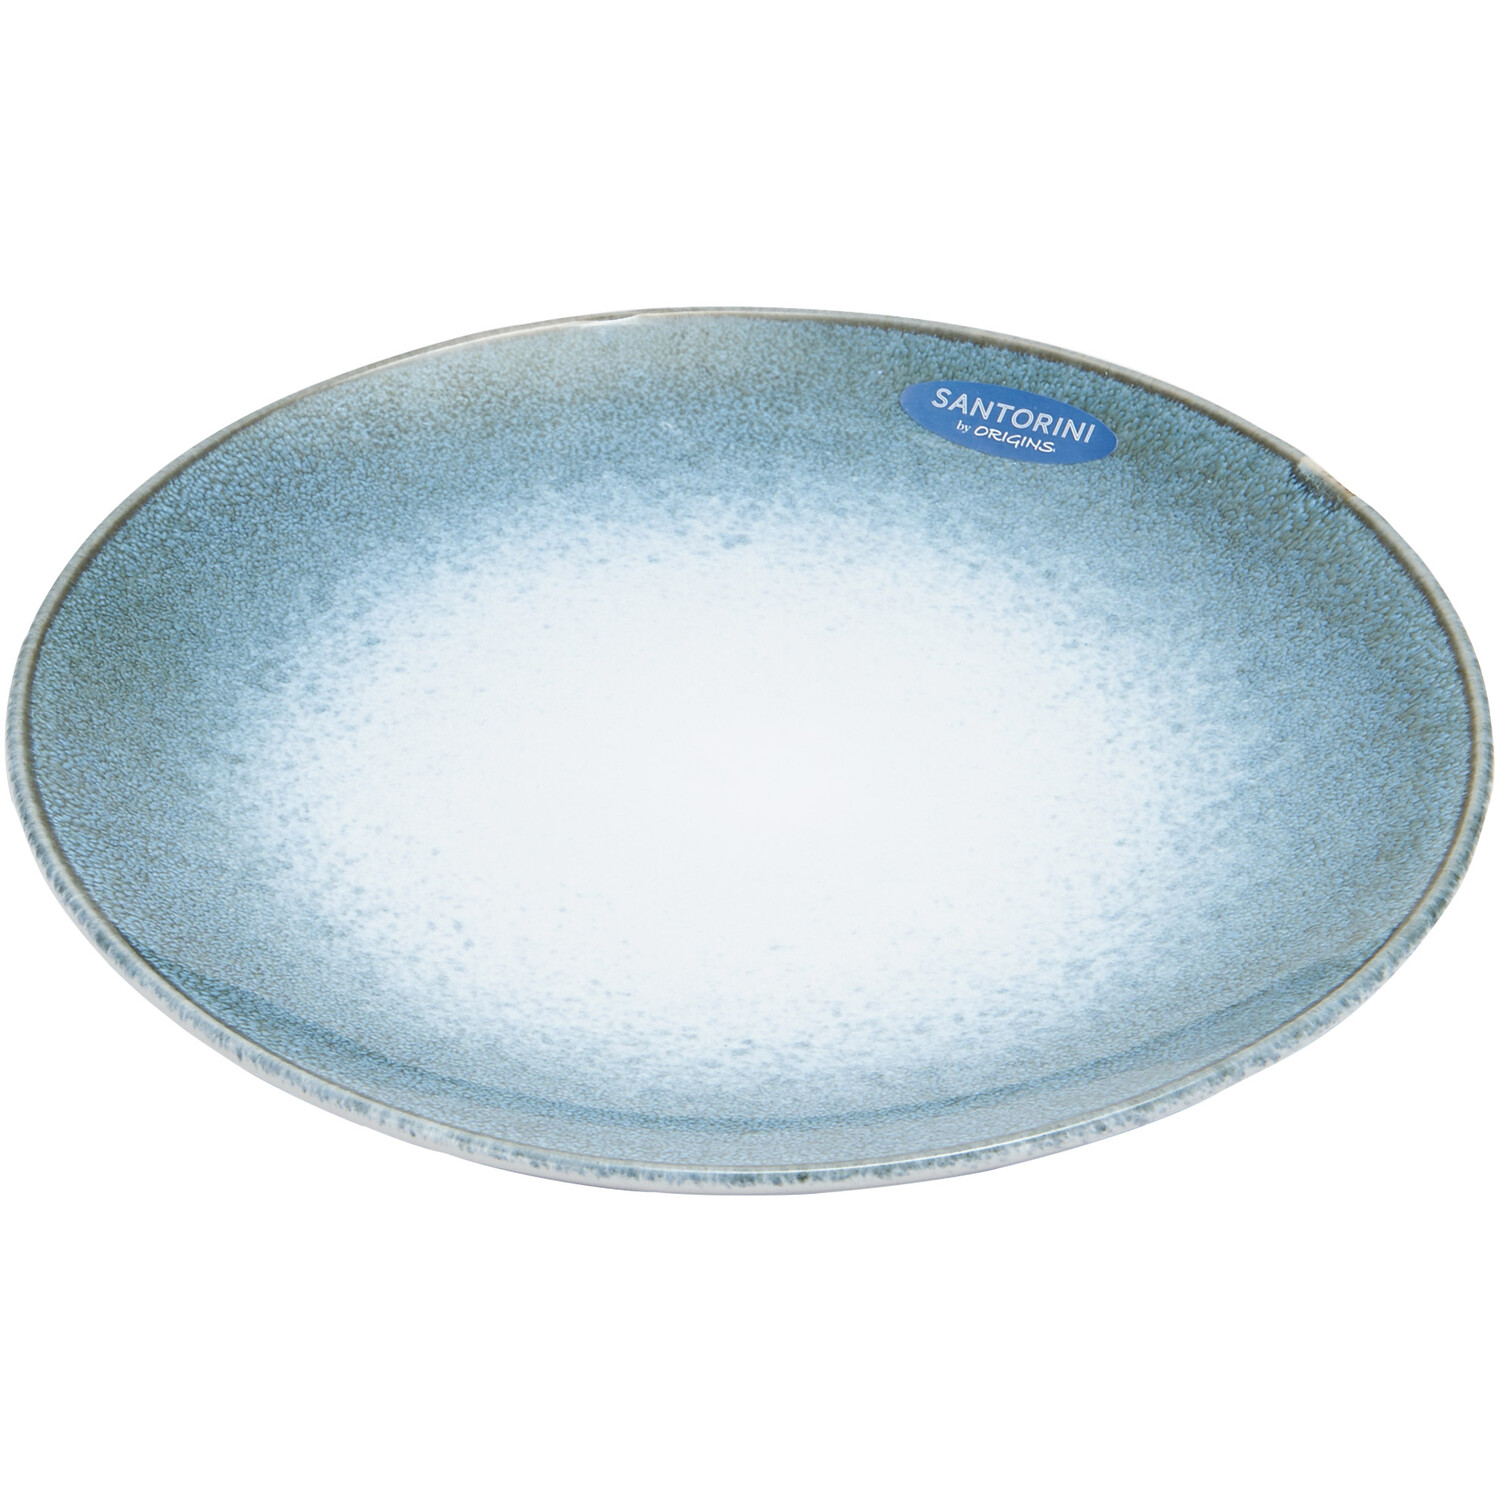 Origins Santorini Reactive Glaze Blue Dinner Plate Image 2